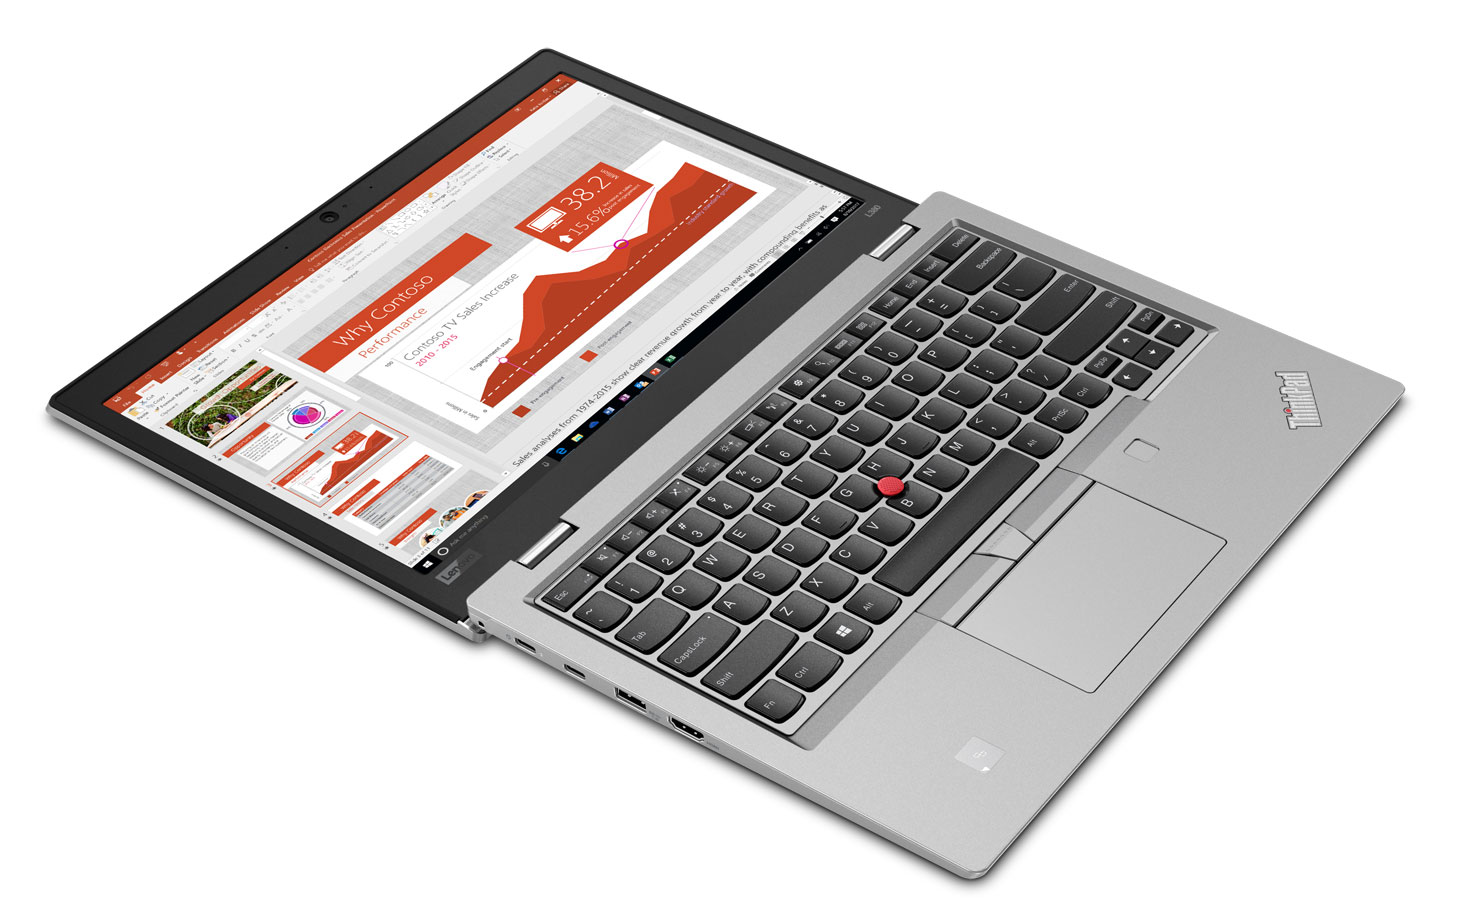 Lenovo ThinkPad L380 - Specs, Tests, and Prices | LaptopMedia.com